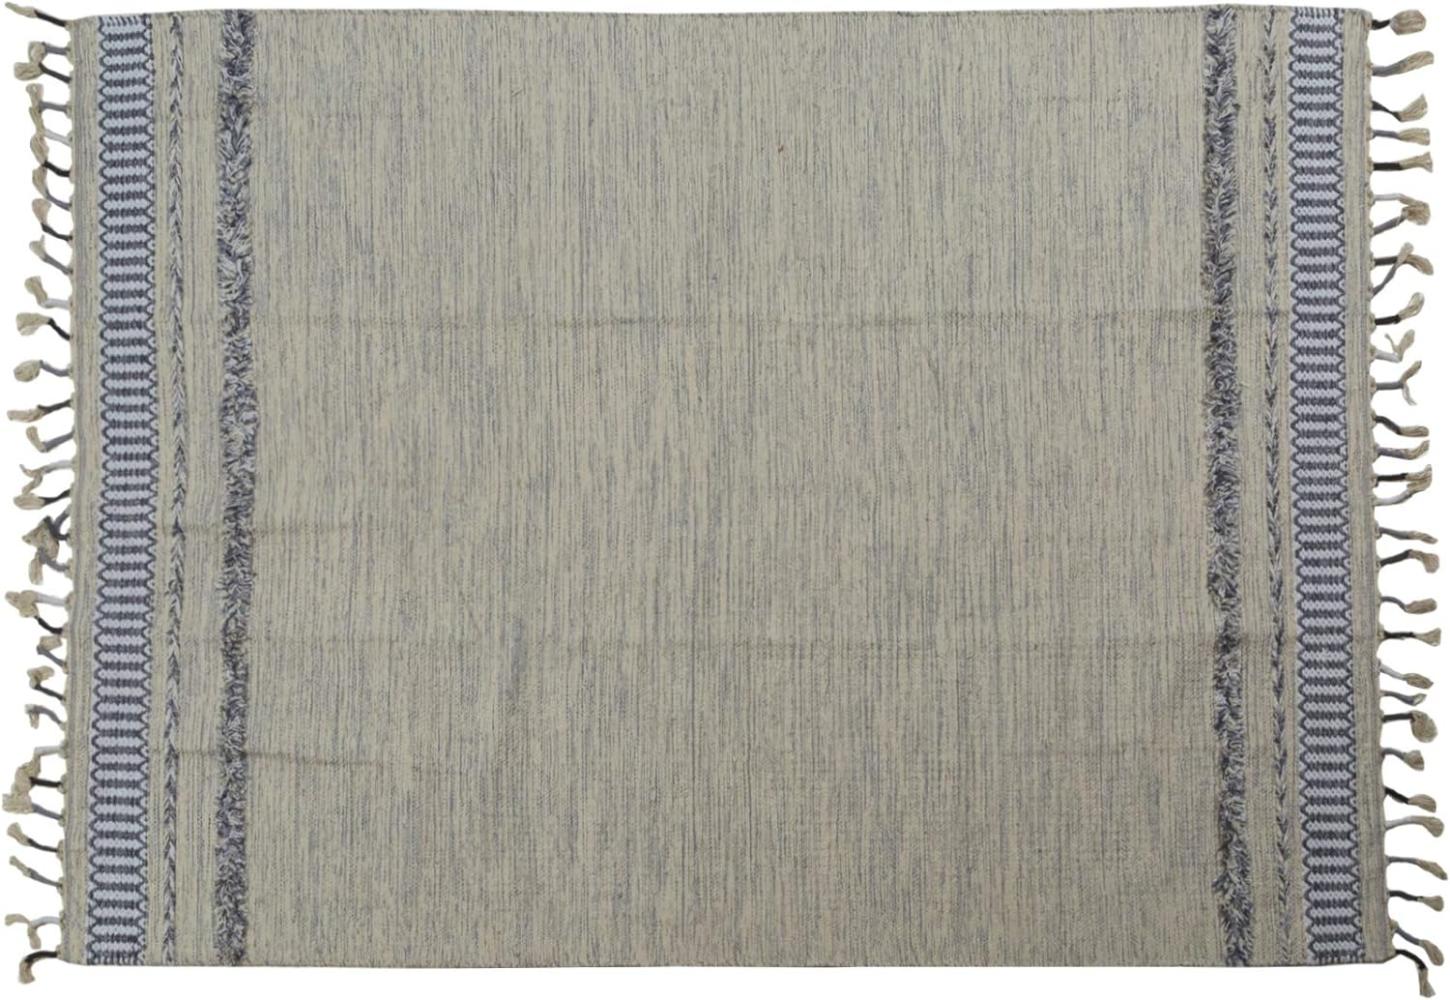 Dmora Moderner Boston-Teppich, Kelim-Stil, 100% Baumwolle, grau, 230x160cm Bild 1